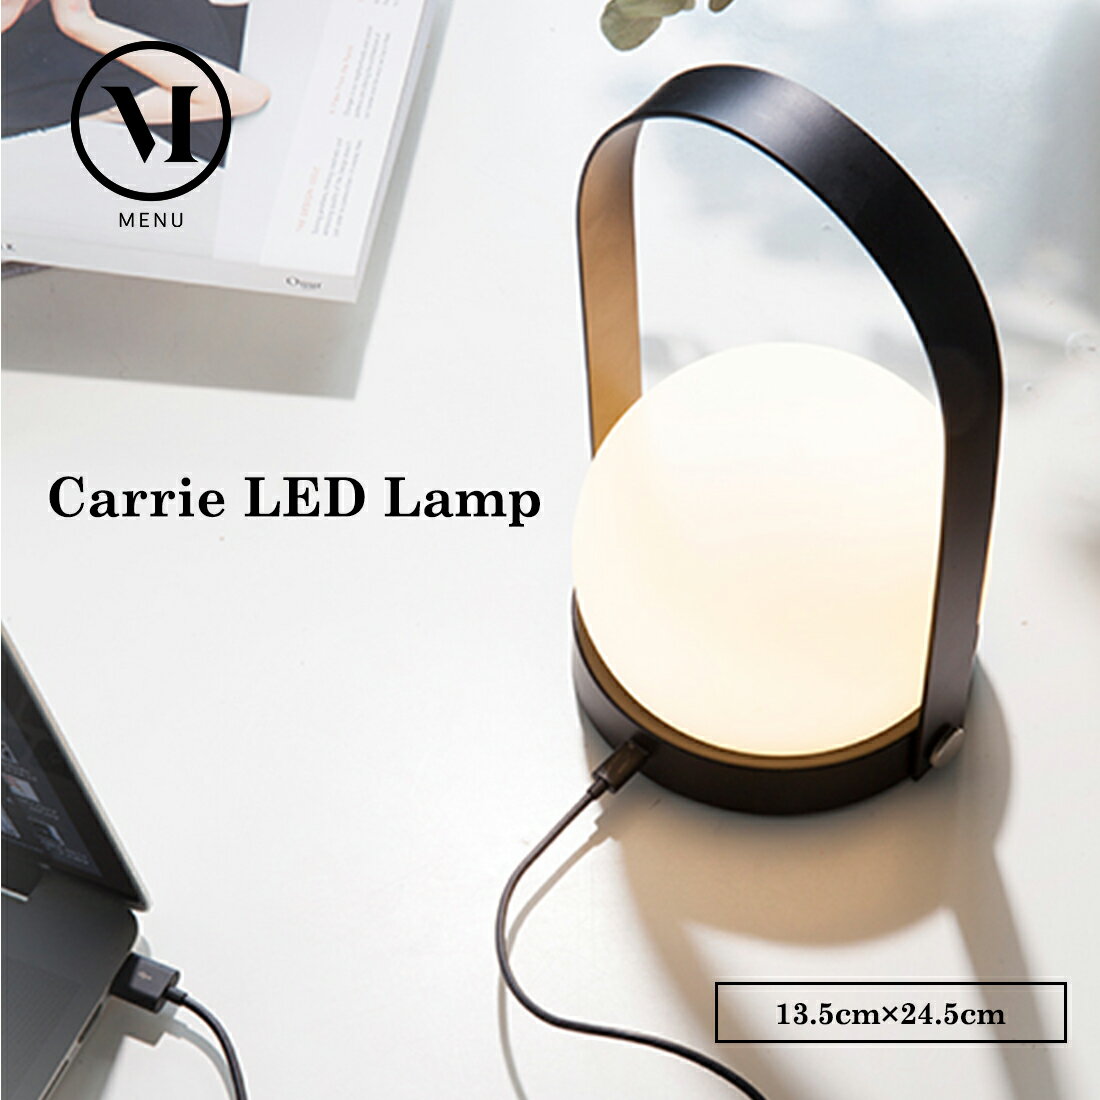  X܃N[|s   i Audo Copenhagen Carrie LED Lamp L[ LED v k CeA Cg qbQ R[hX USB[d